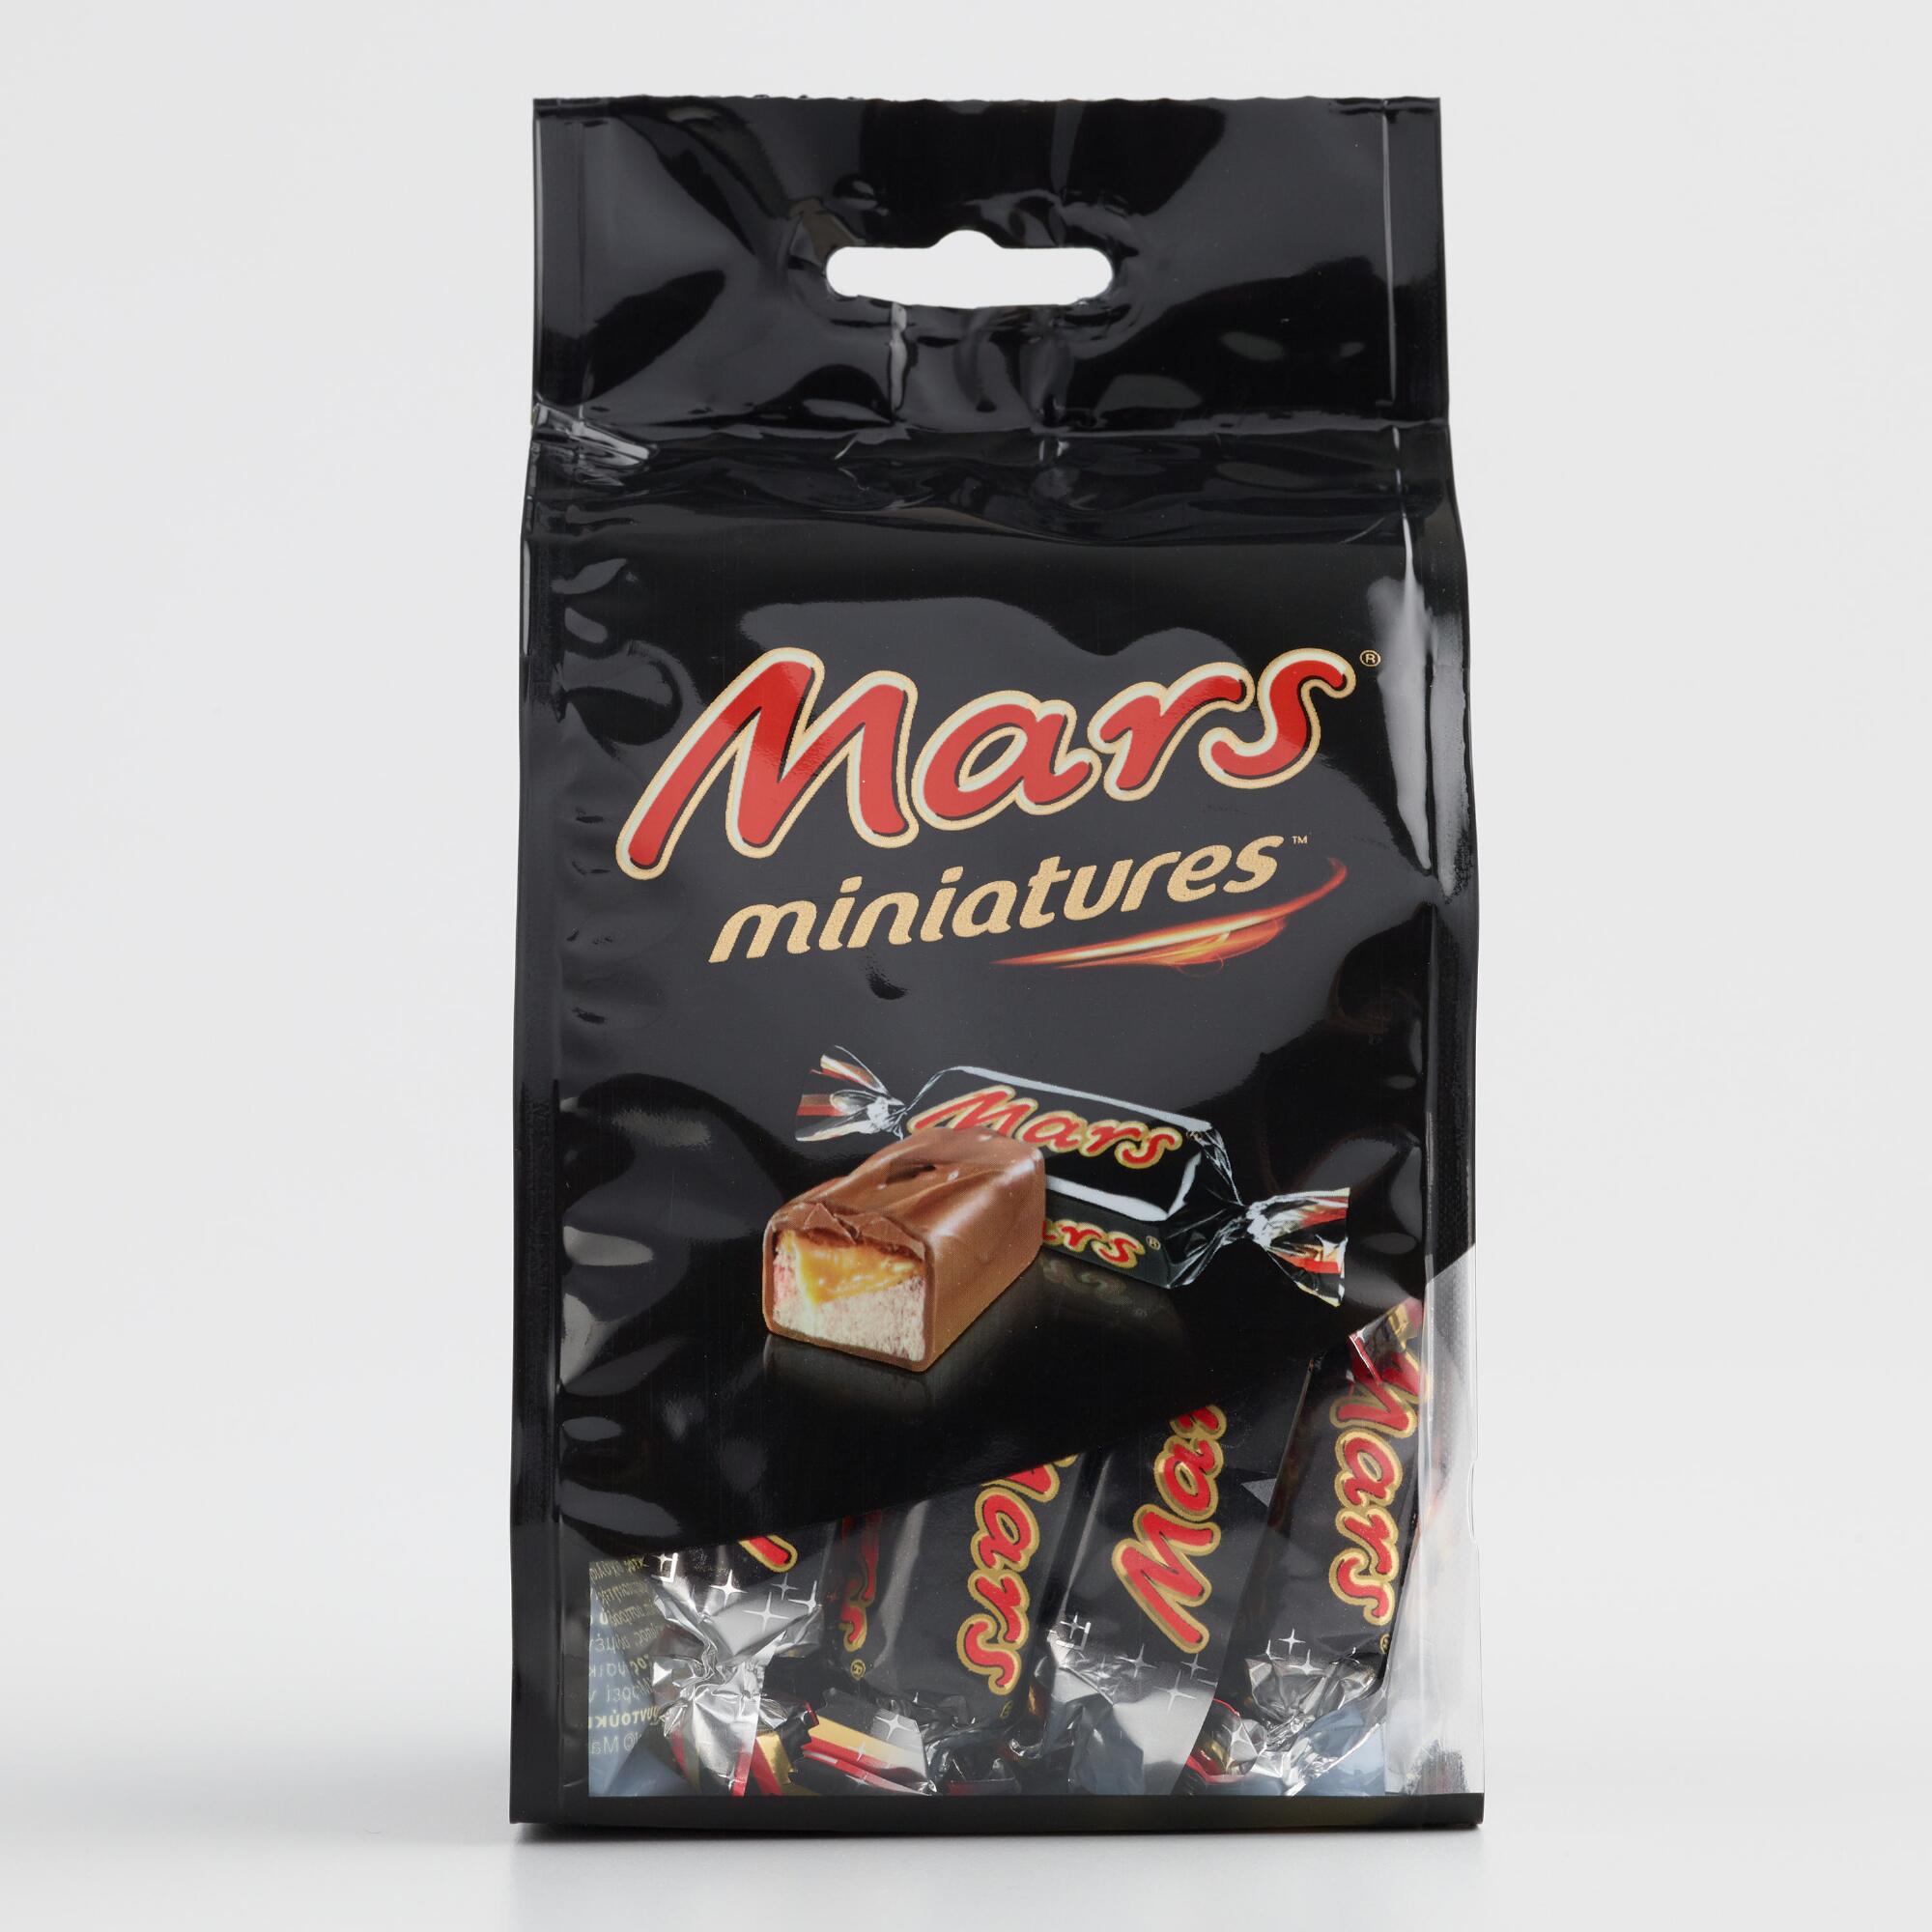 Mars Miniatures Chocolate Bars by World Market